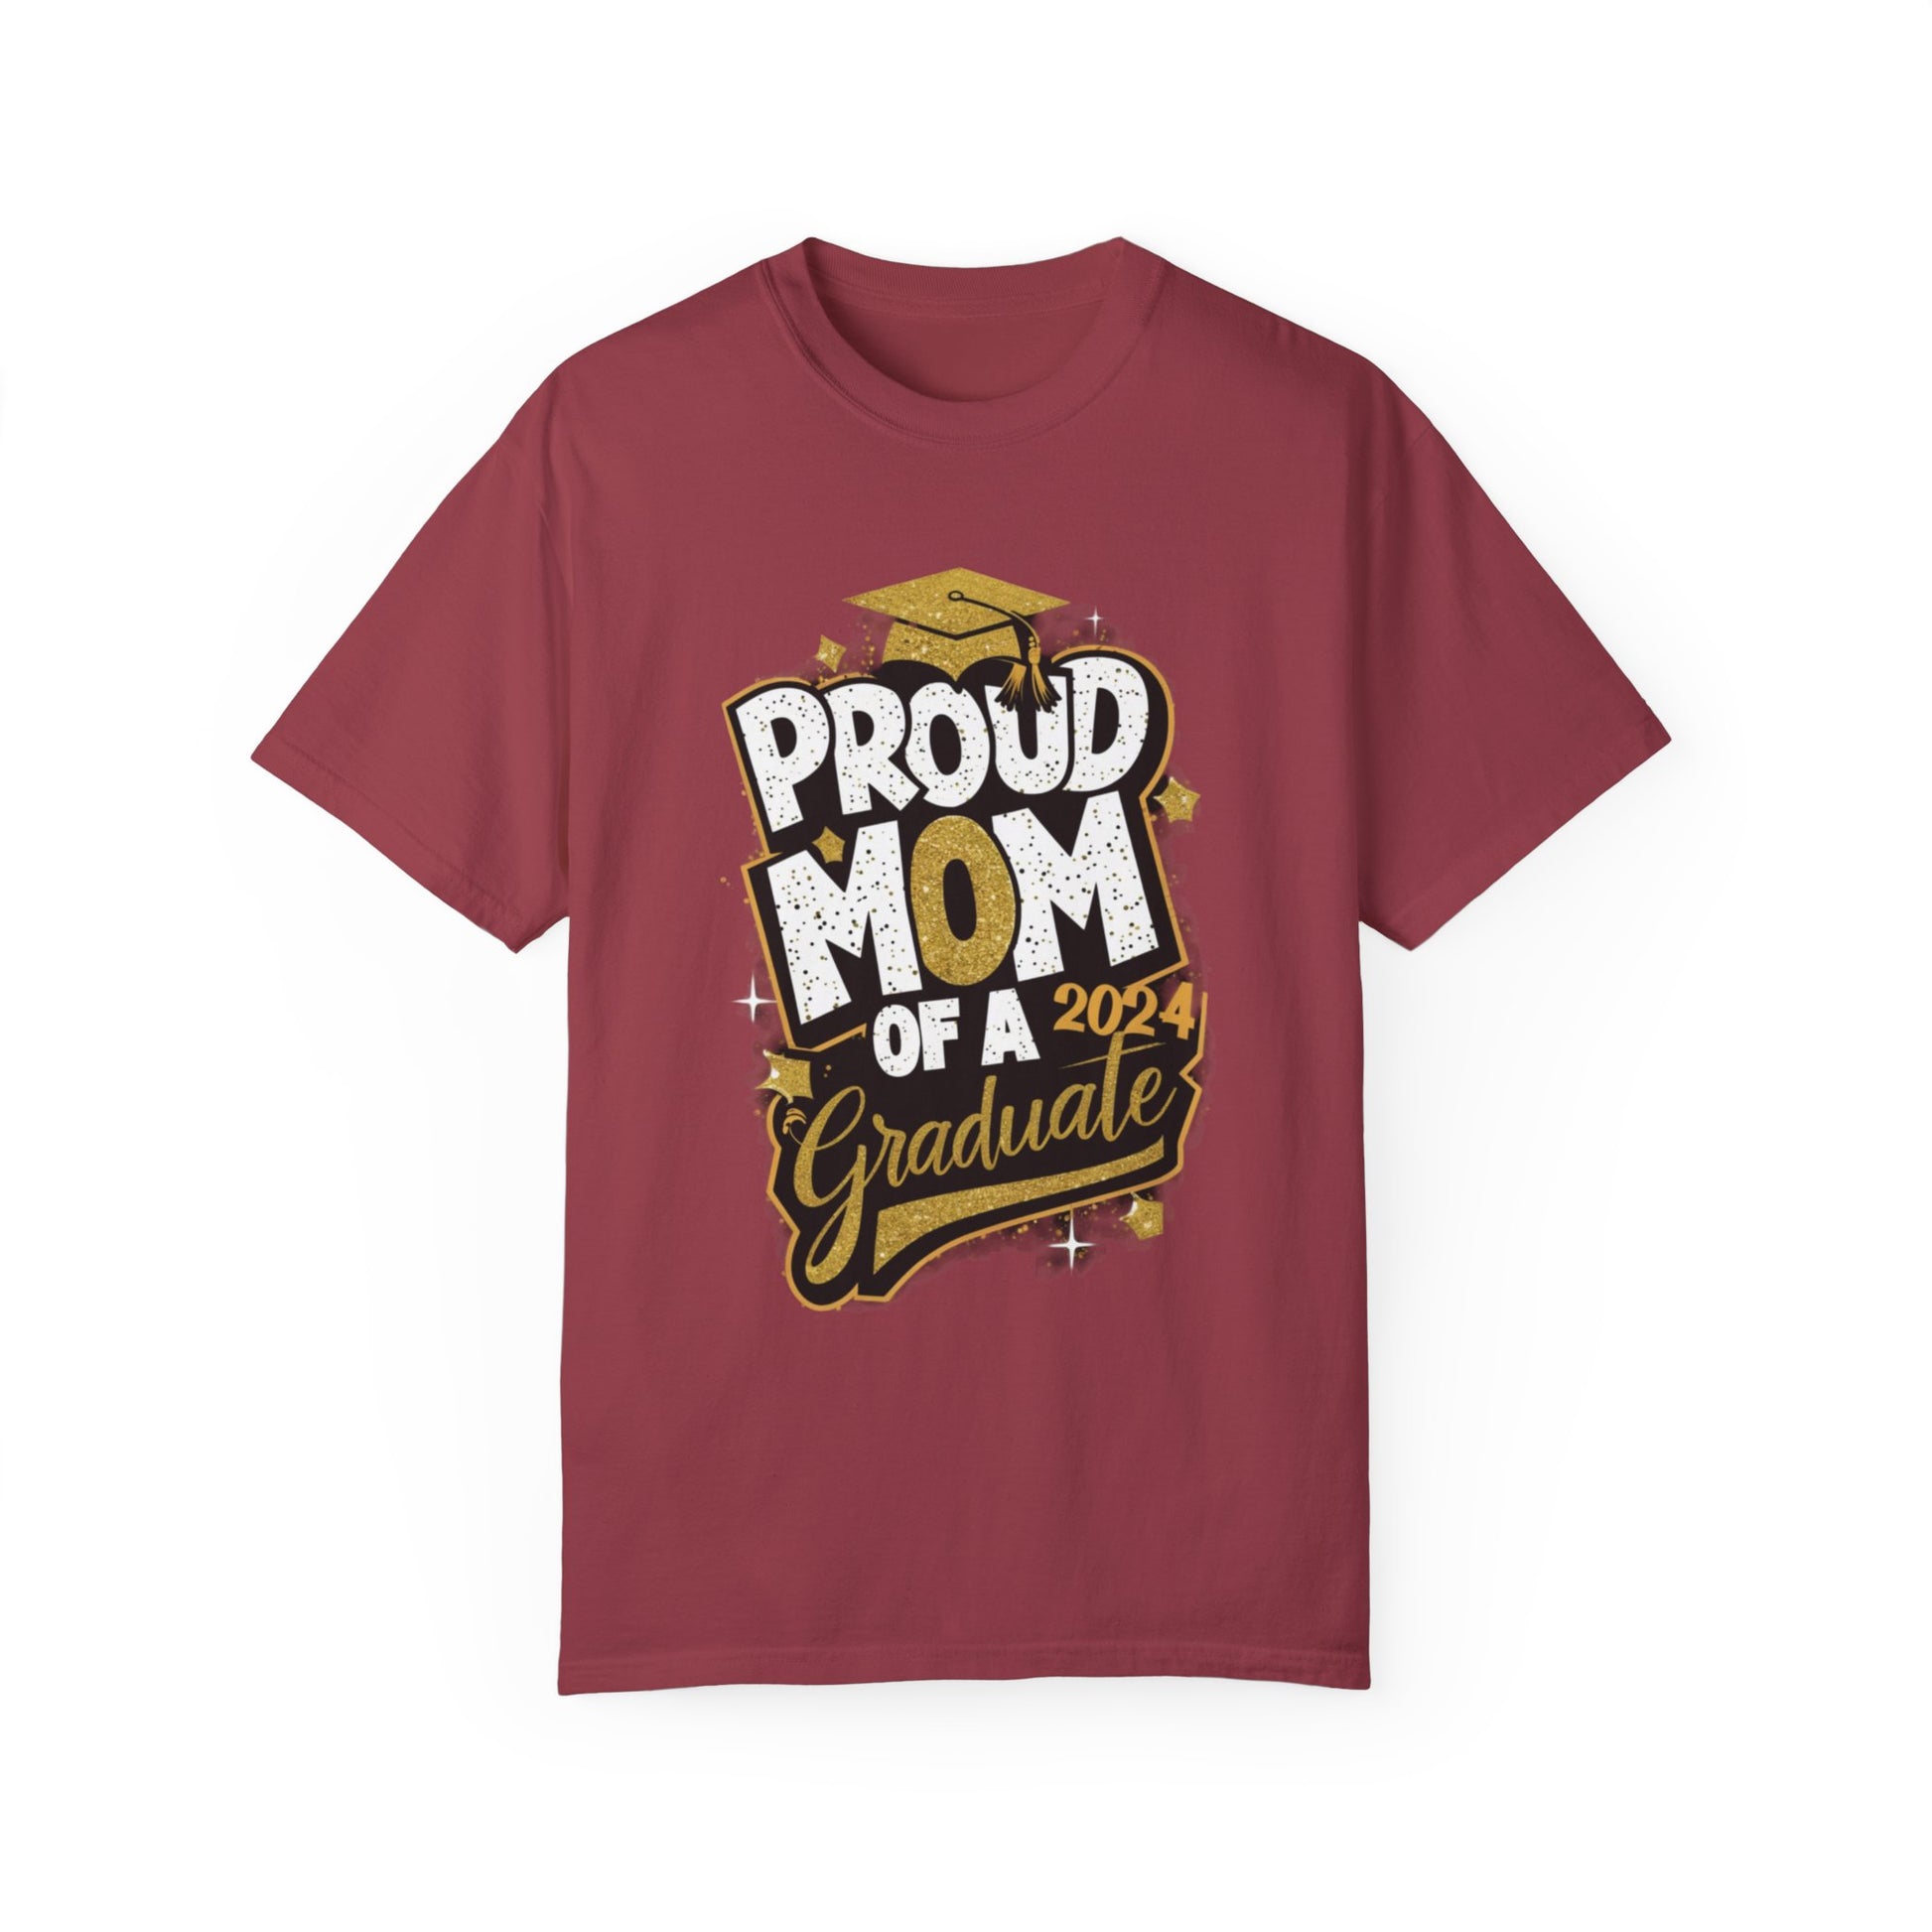 Proud Mom of a 2024 Graduate Unisex Garment-dyed T-shirt Cotton Funny Humorous Graphic Soft Premium Unisex Men Women Chili T-shirt Birthday Gift-7